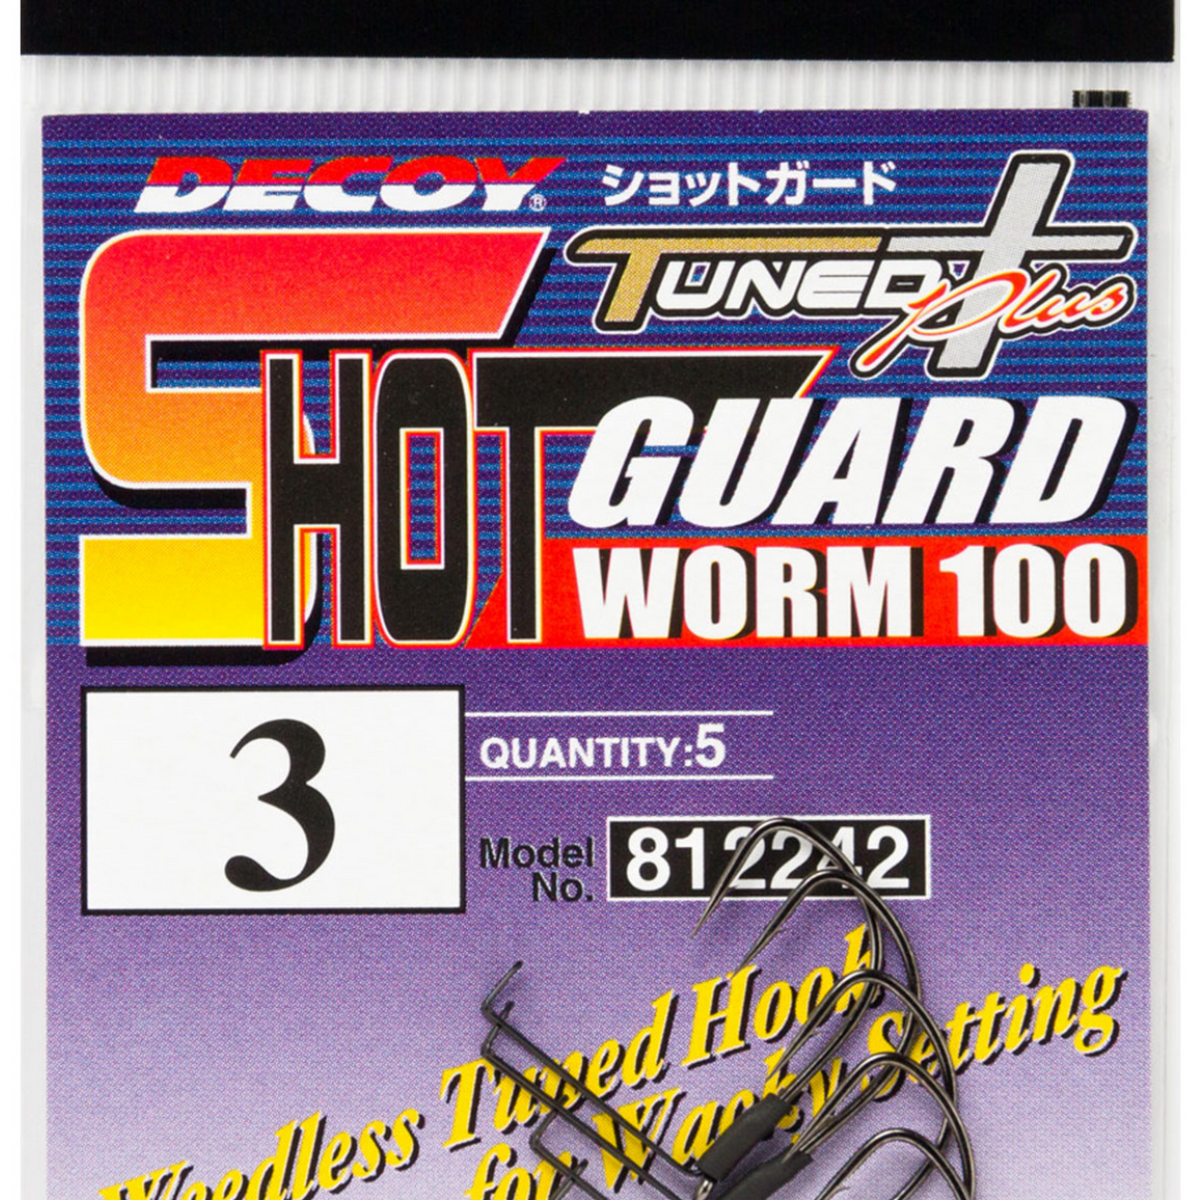 Decoy WORM100 Shot Guard 1